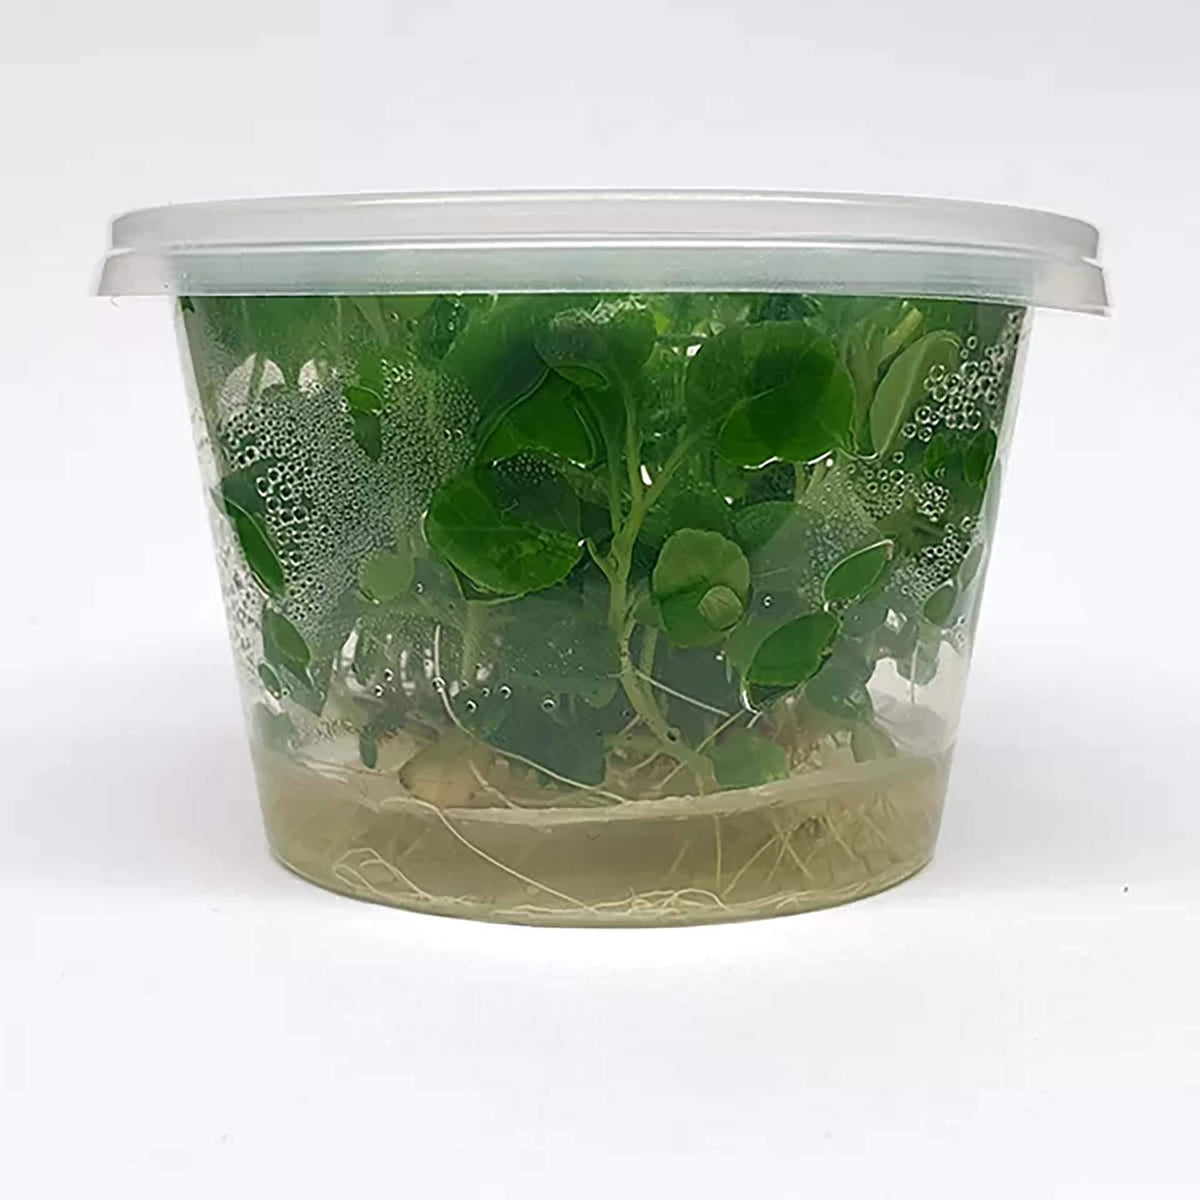 Lobelia cardinalis ‘Mini’ Live Plant - Tissue Culture